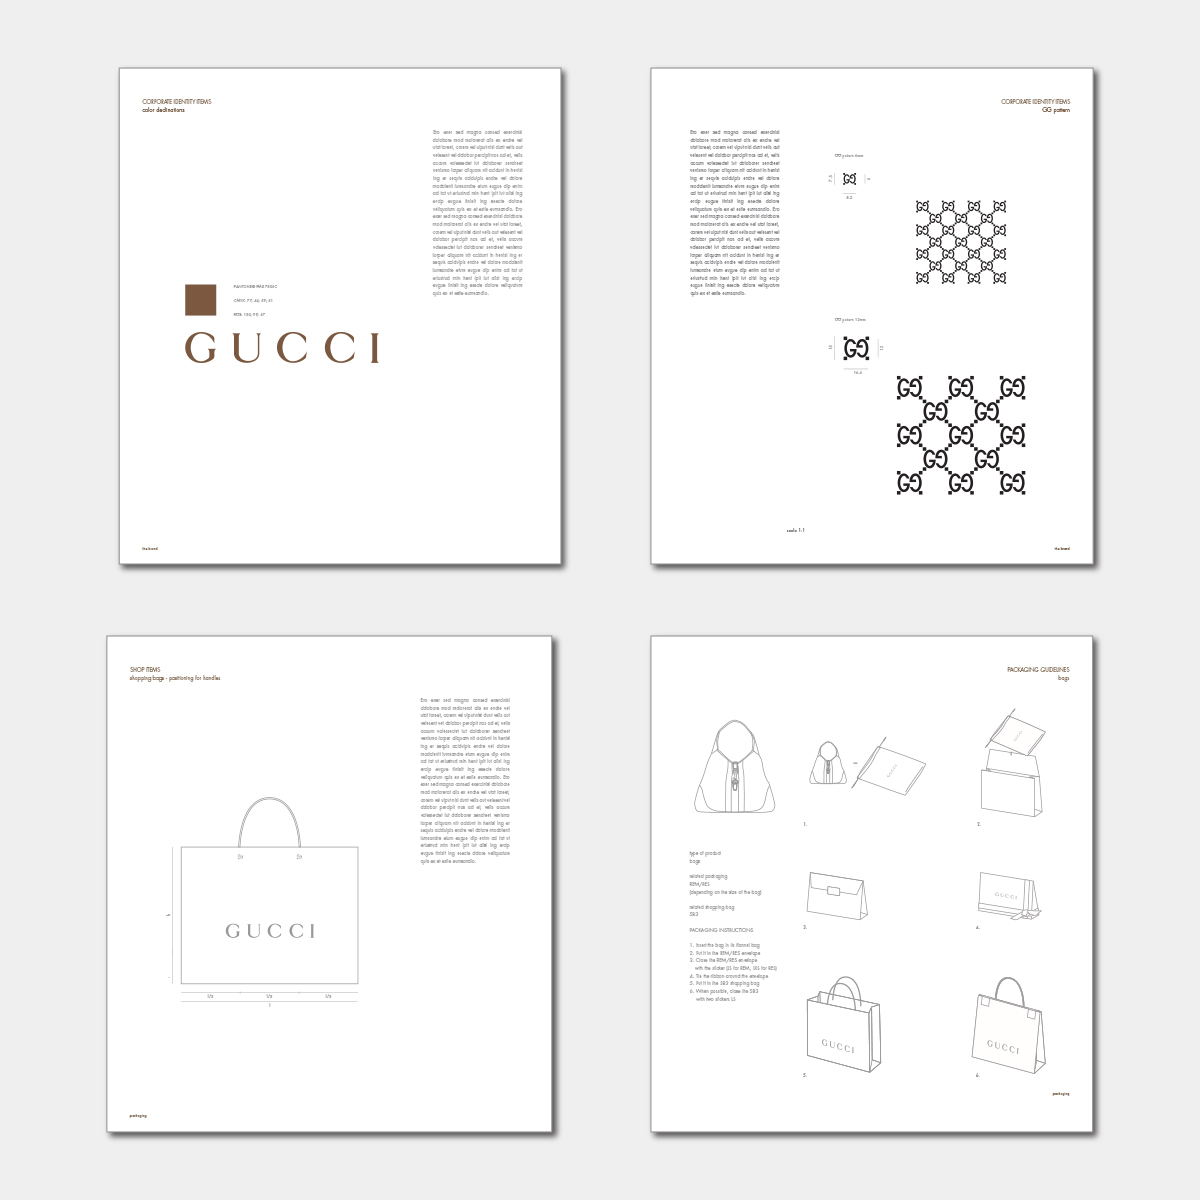 %luca.fruzza/visual.designerGucci   Brandbook